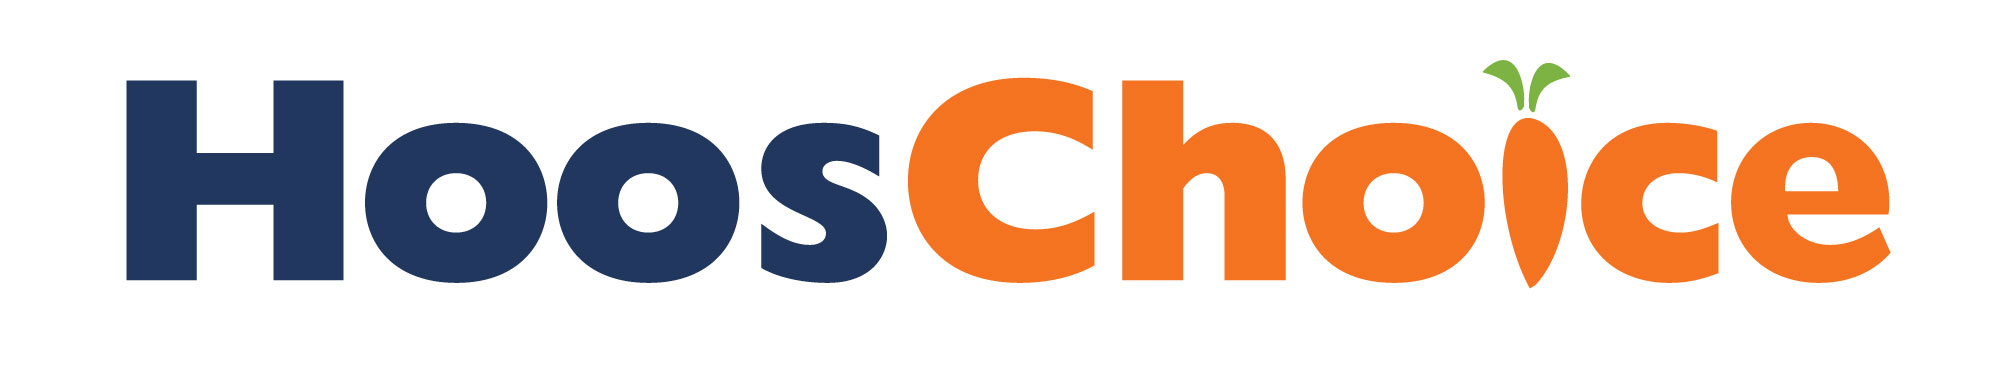 Hoos choice logo